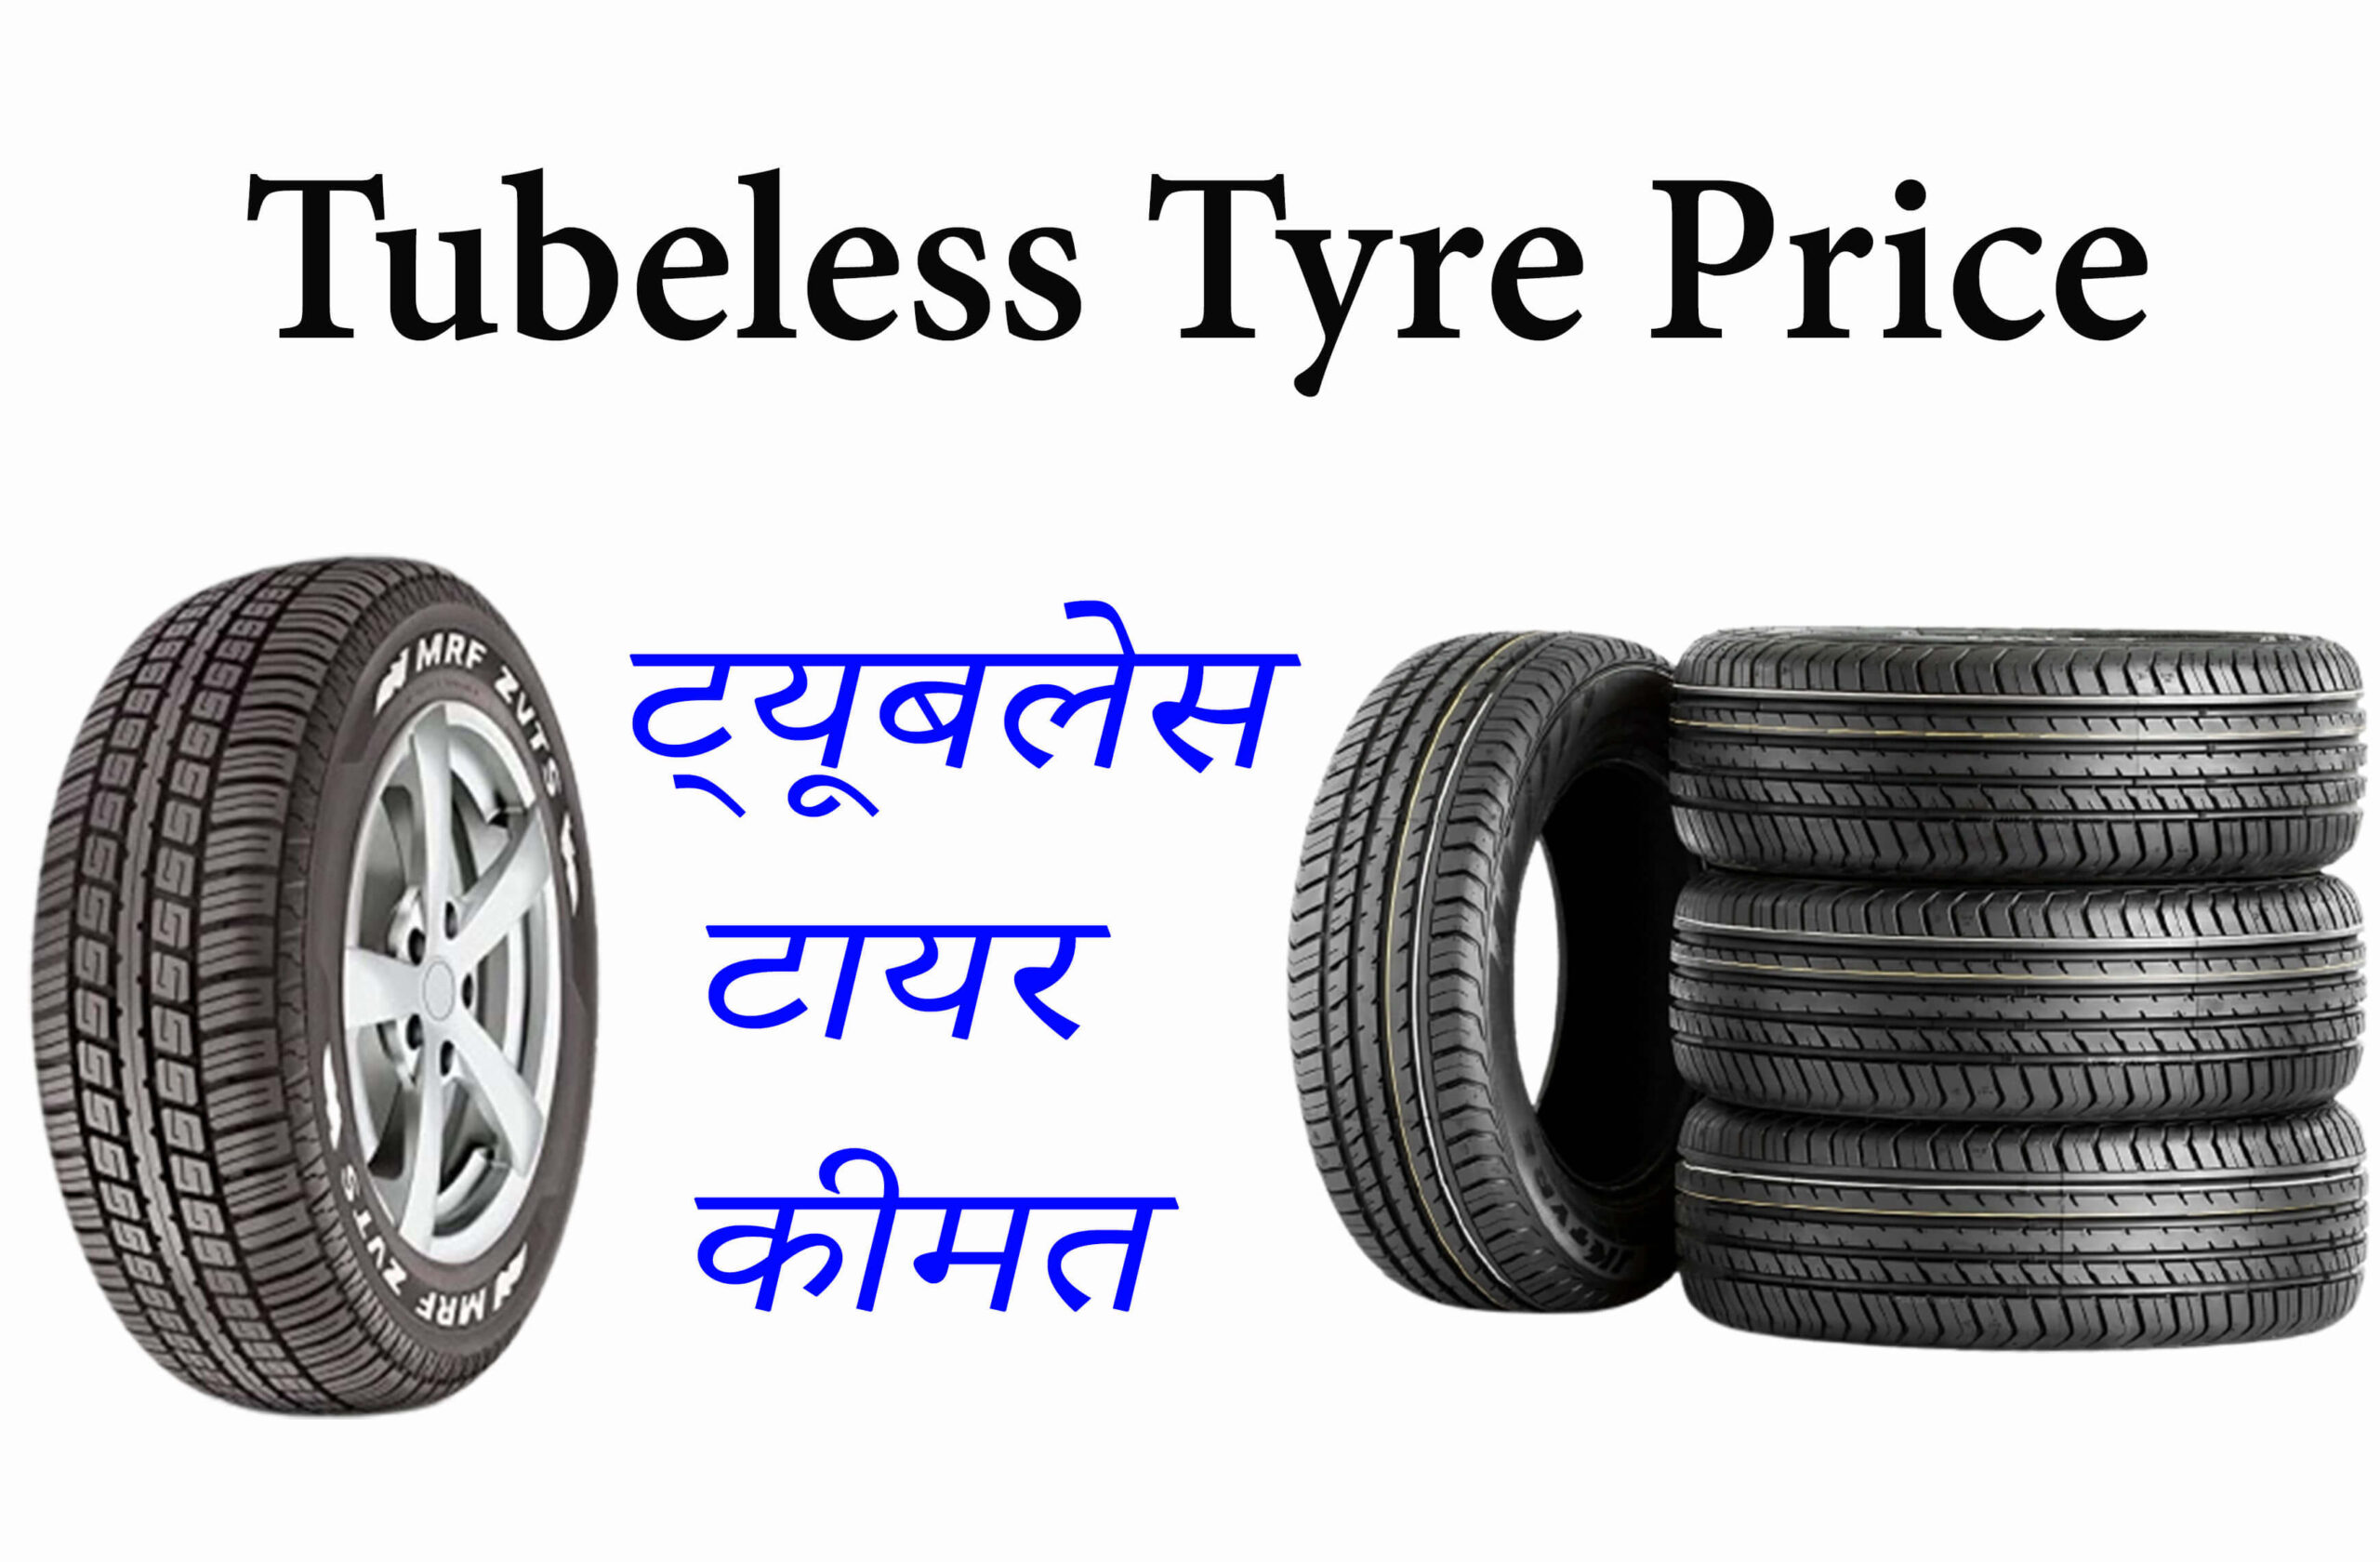 Tubeless Tyre Price